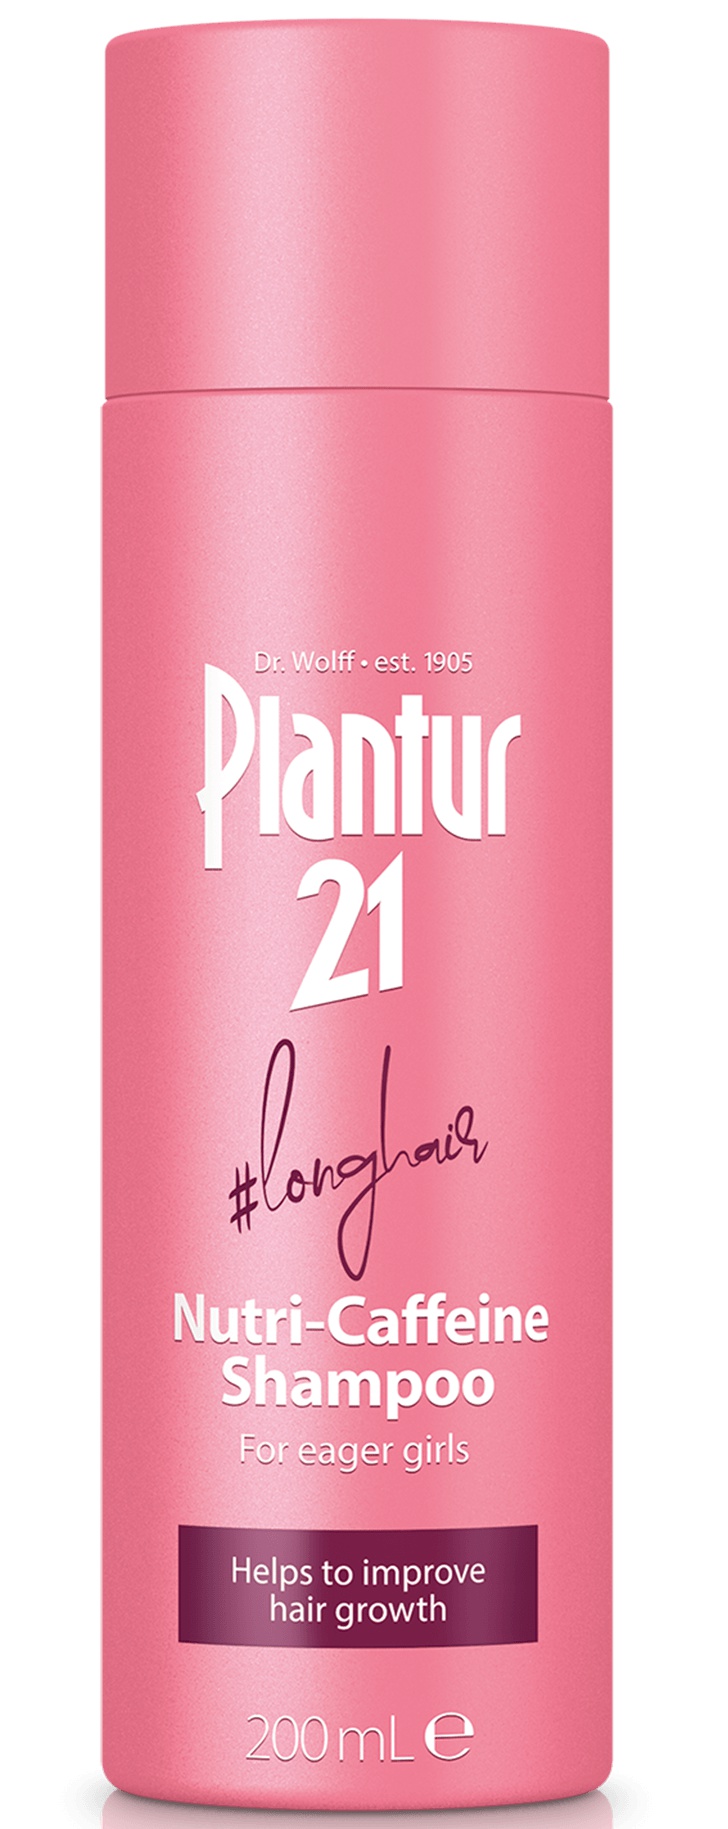 Plantur 21 #longhair Shampoo